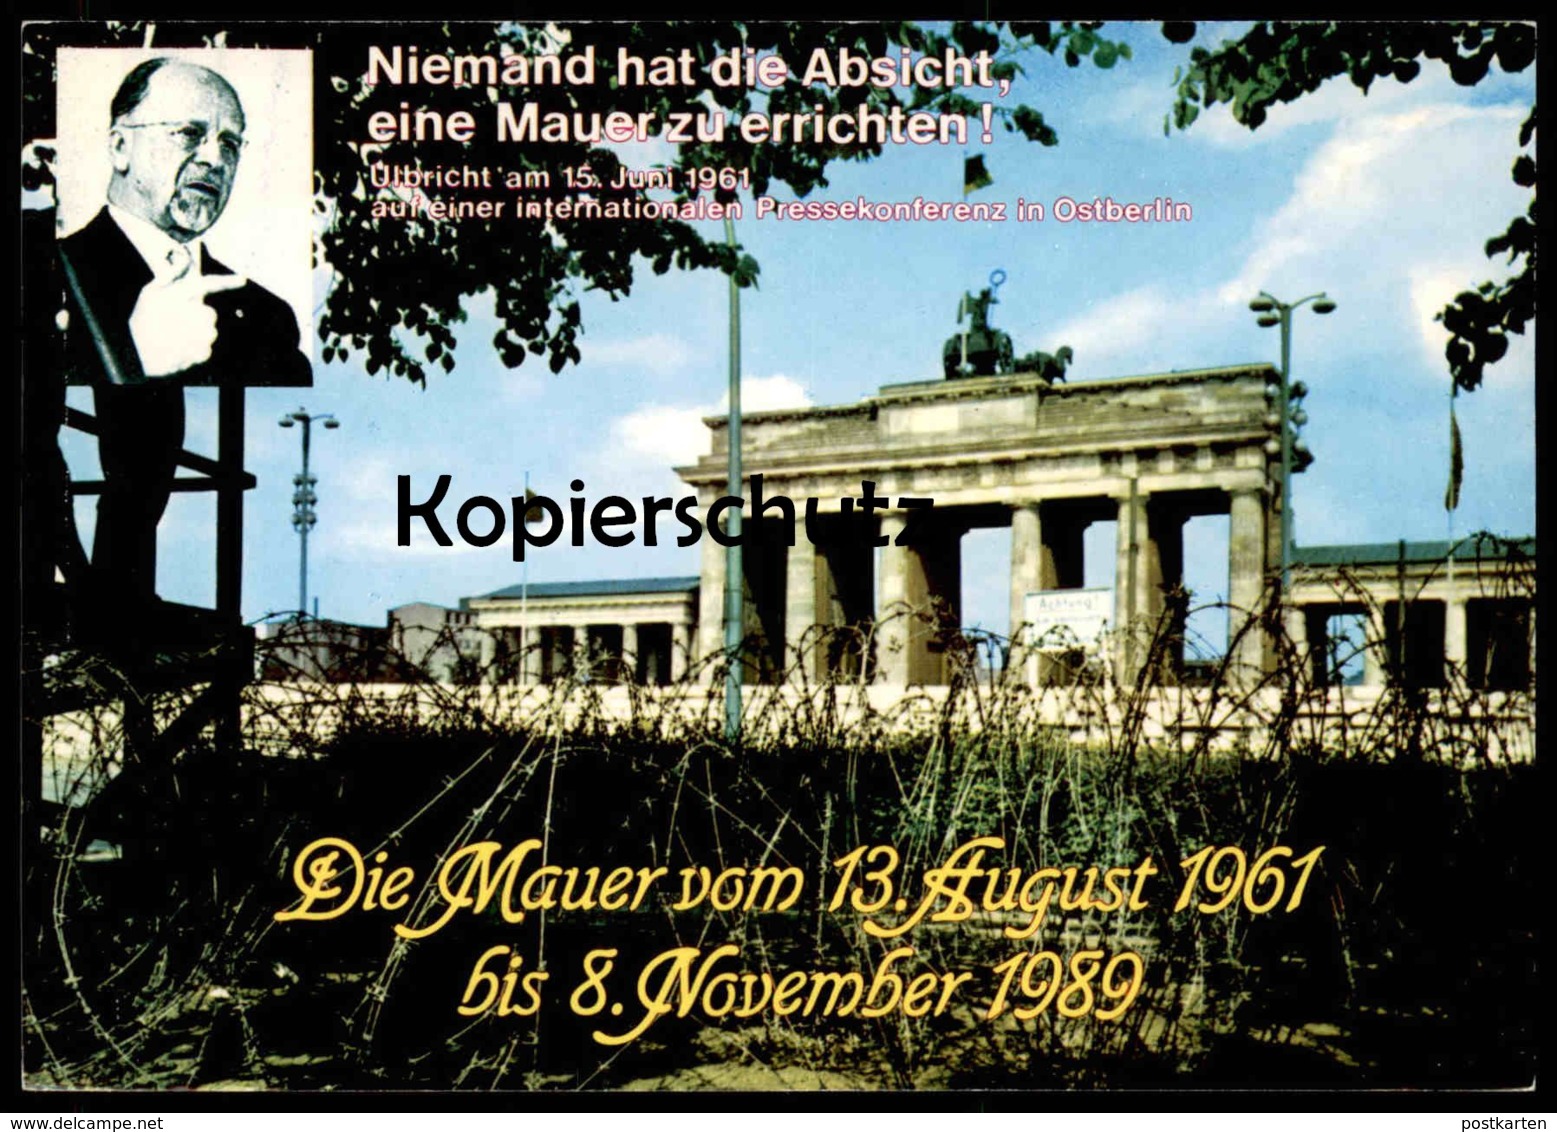 ÄLTERE POSTKARTE BERLIN BERLINER MAUER ULBRICHT NIEMAND HAT DIE ABSICHT EINE... LE MUR THE WALL Ansichtskarte Postcard - Berlin Wall